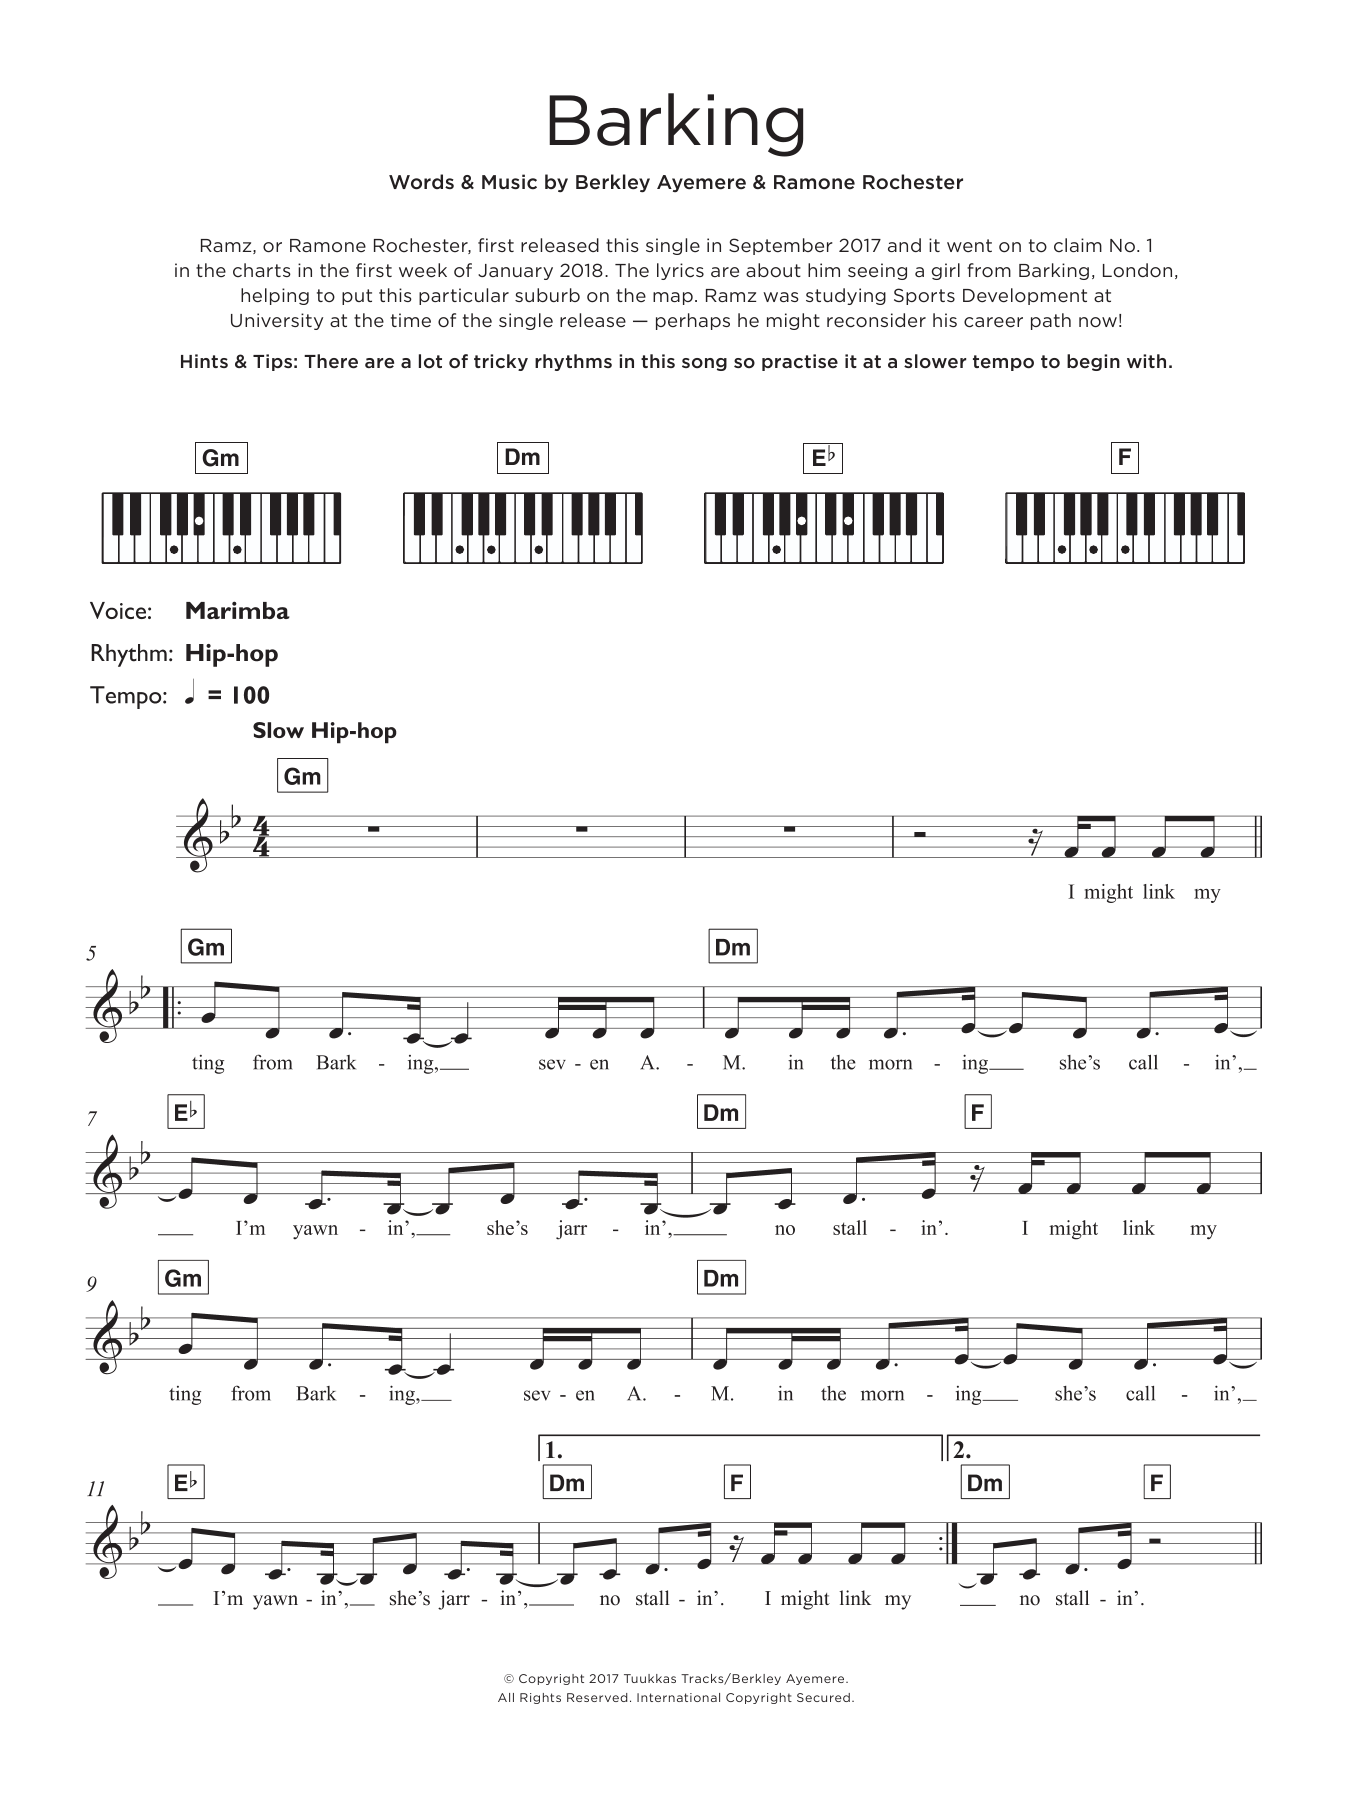 Ramz Barking Sheet Music Notes & Chords for Beginner Piano - Download or Print PDF